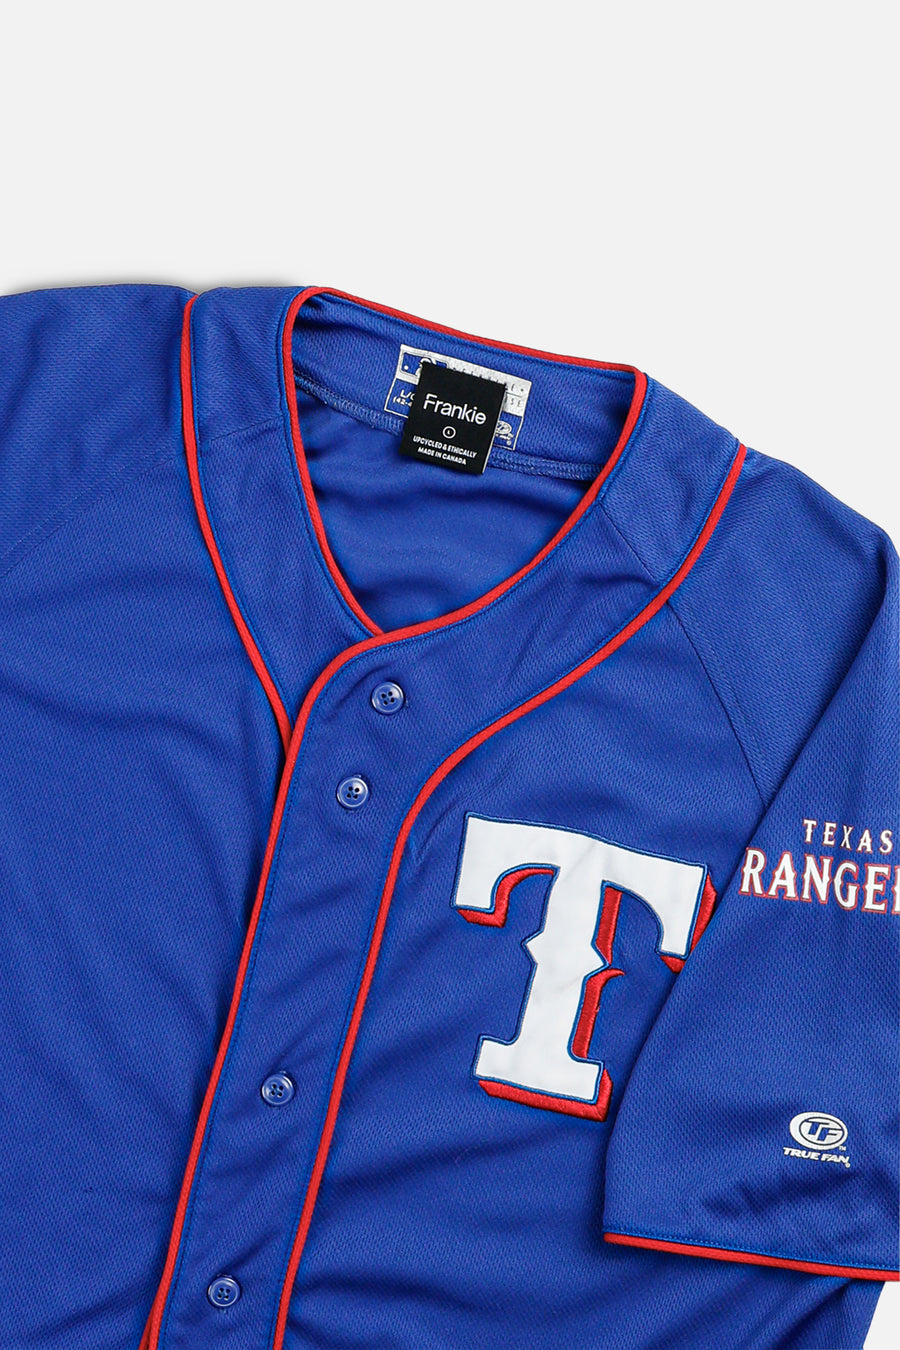 Rework Crop Texas Rangers MLB Jersey - L